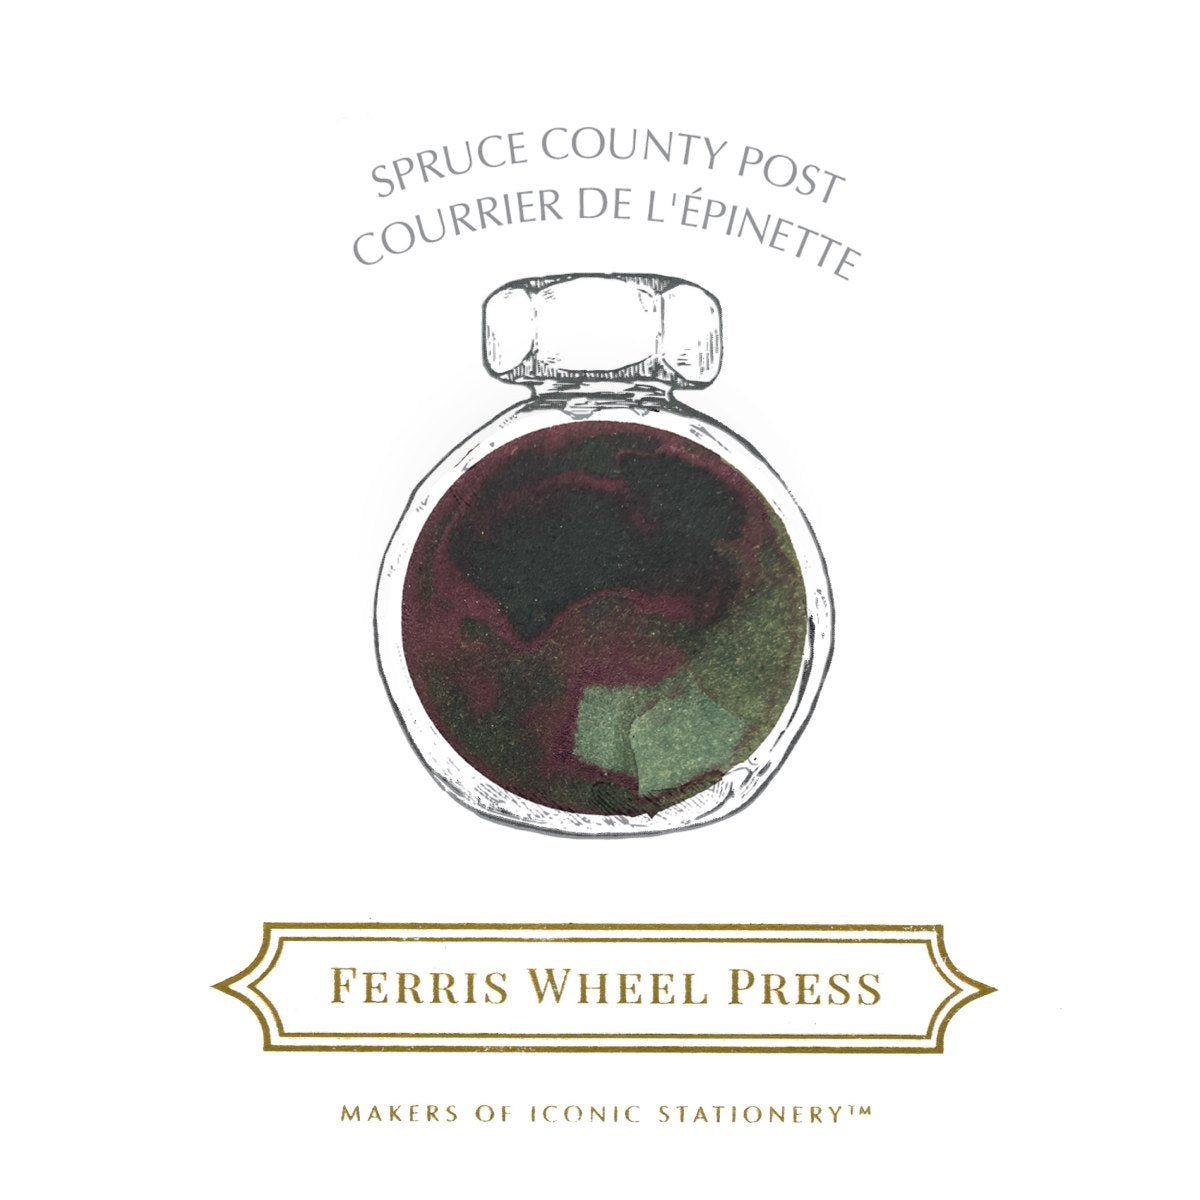 Ferris Wheel Press - Spruce County Post, 38 ml